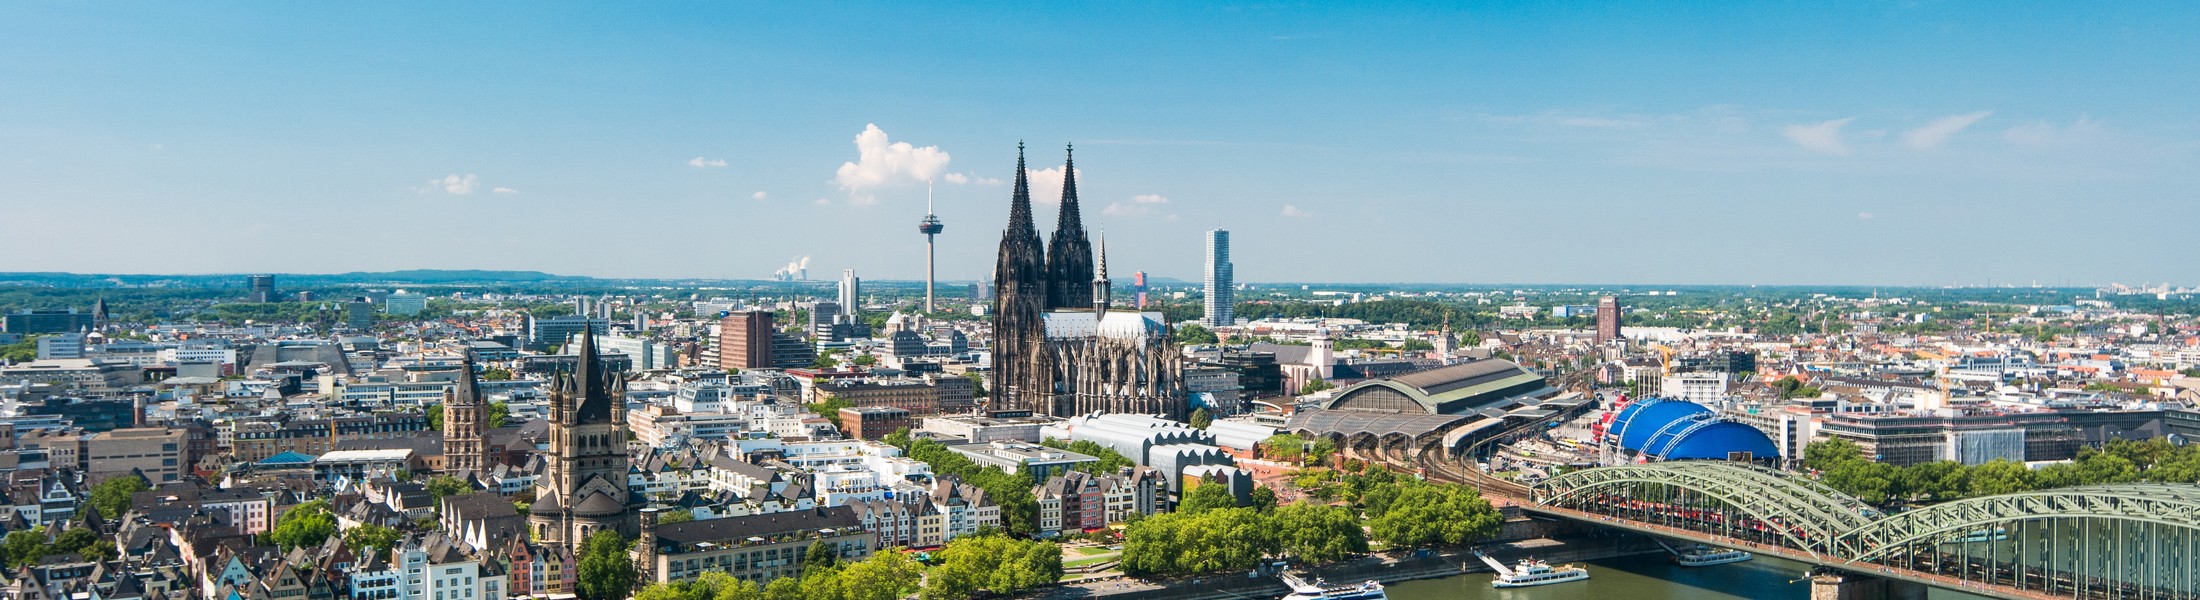 Immobilienmakler Köln - Immobilien in Köln